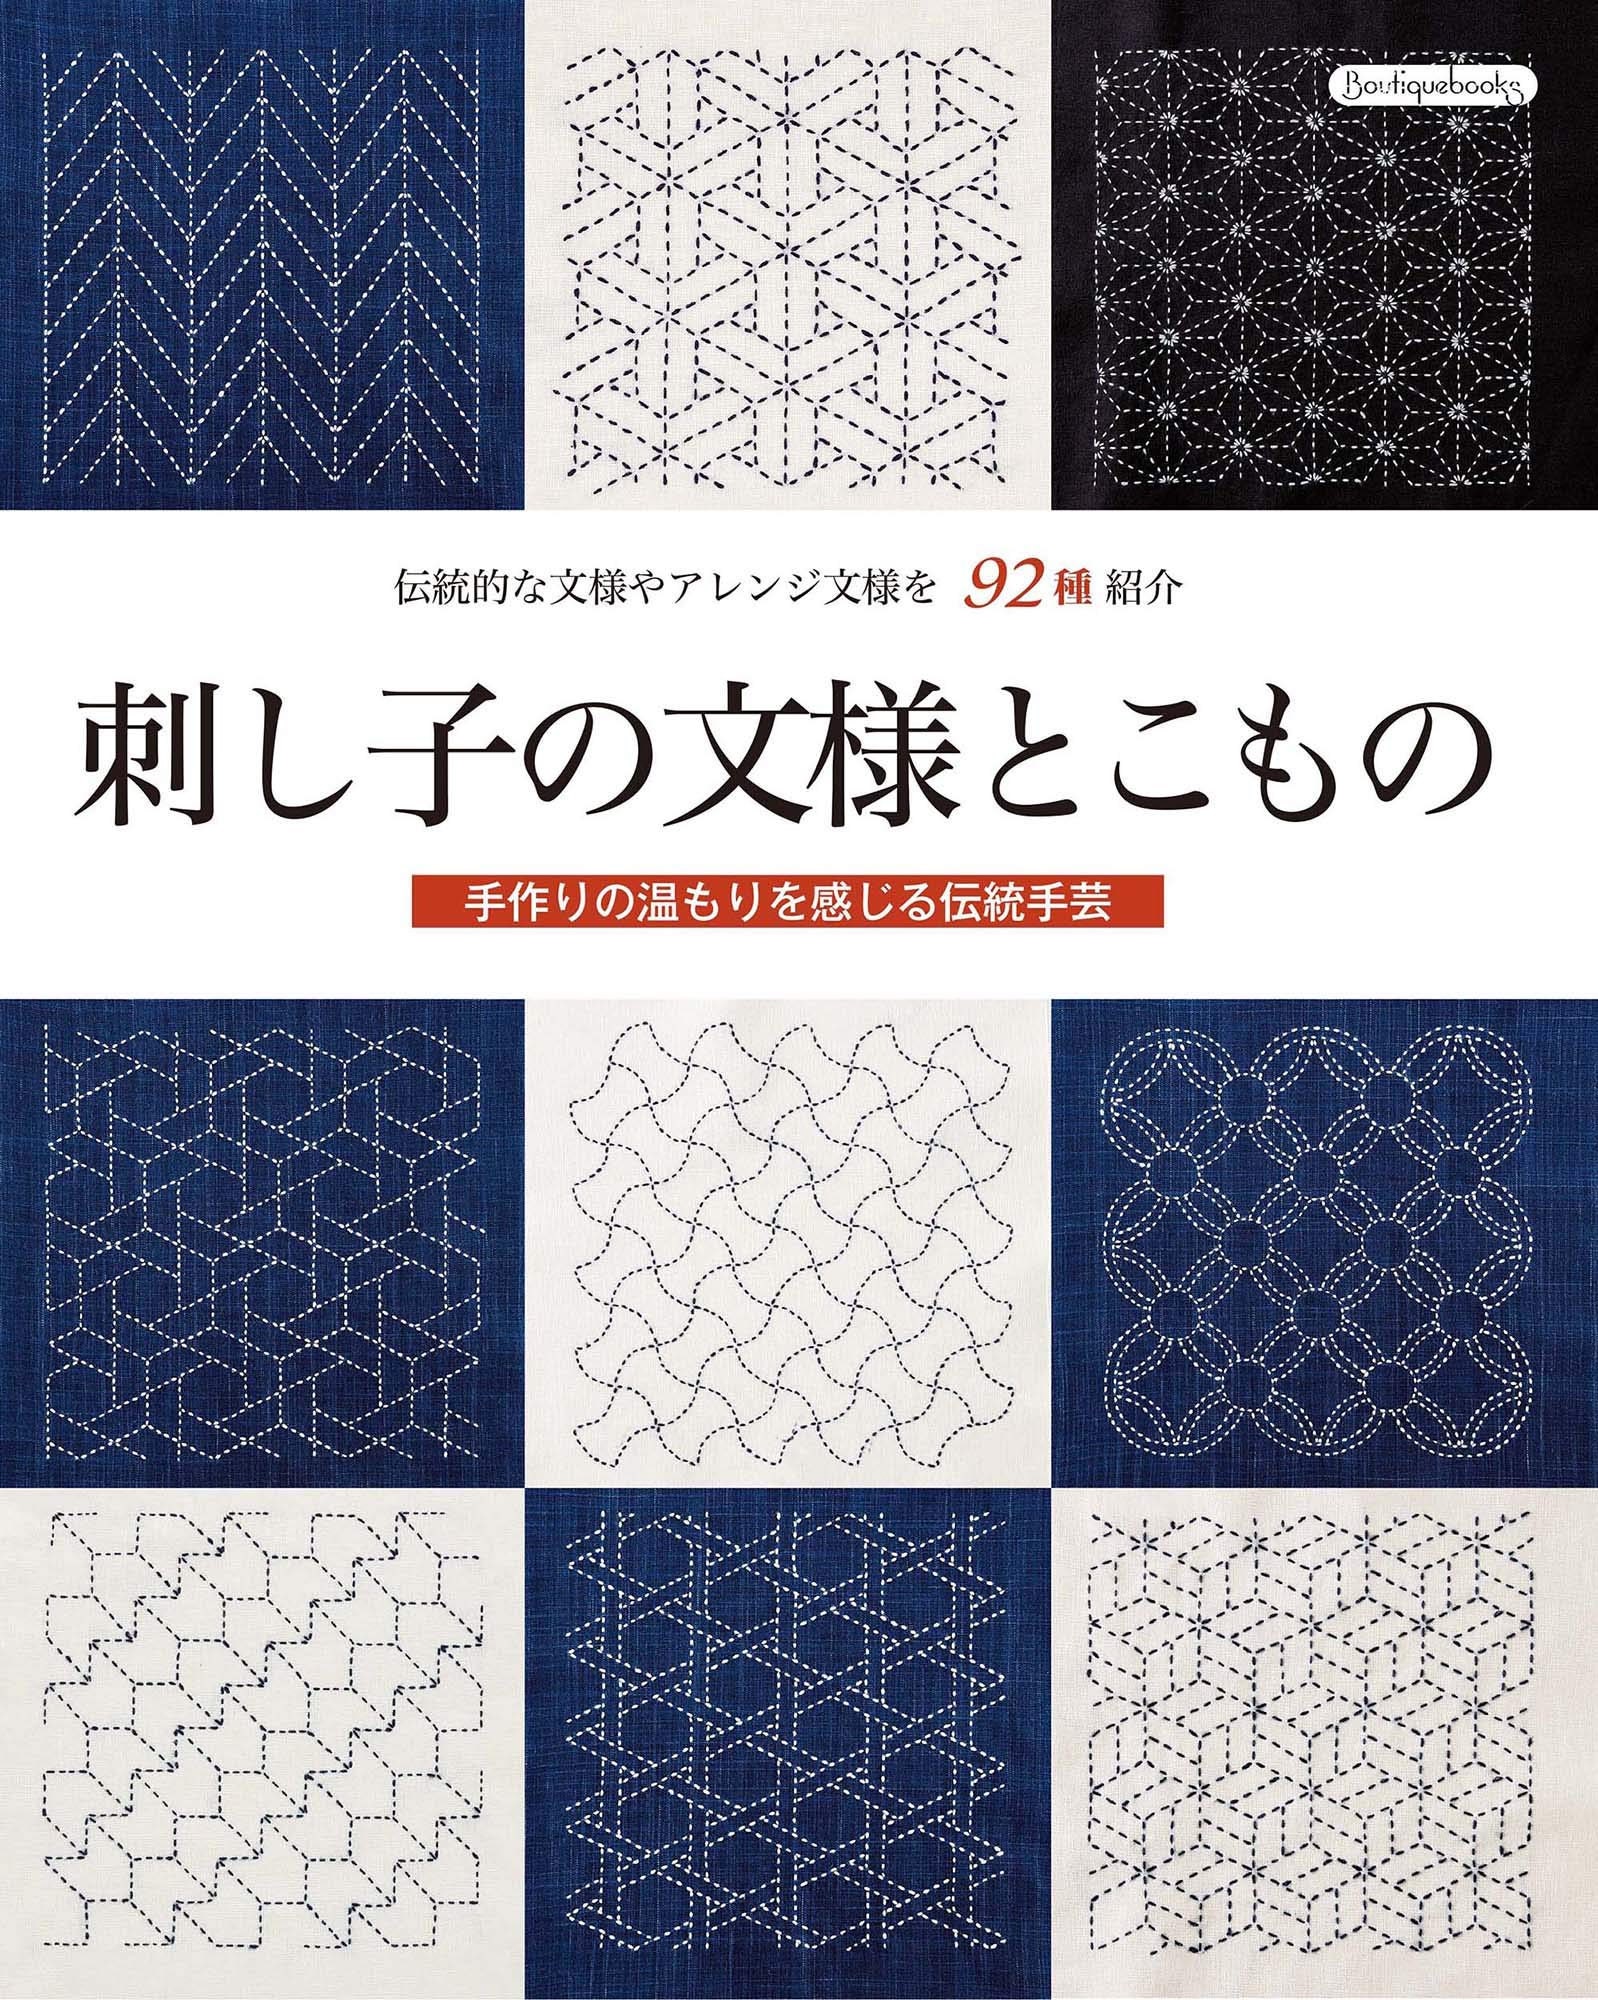 Japanese sashiko: The art of stitching stories